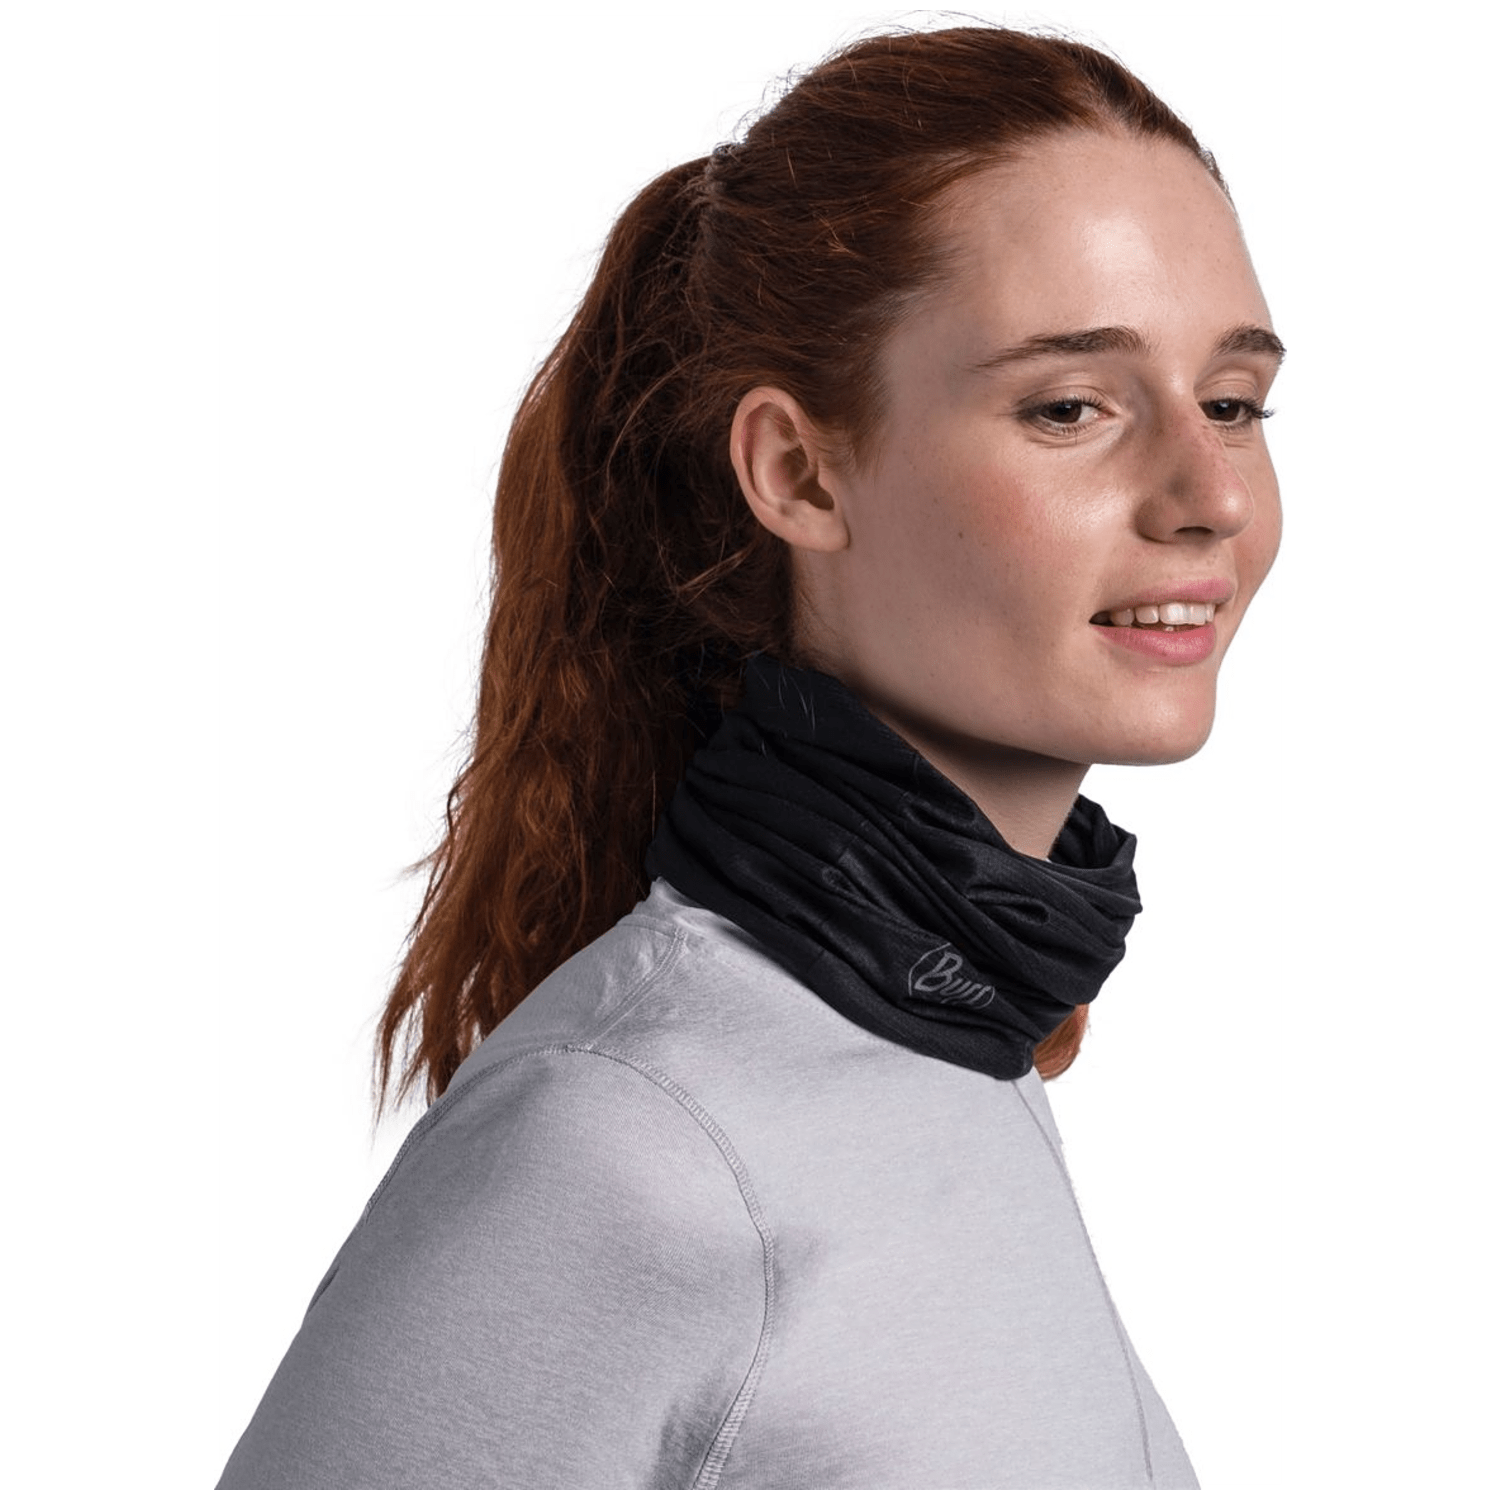 Buff CoolNet UV® Solid Schal